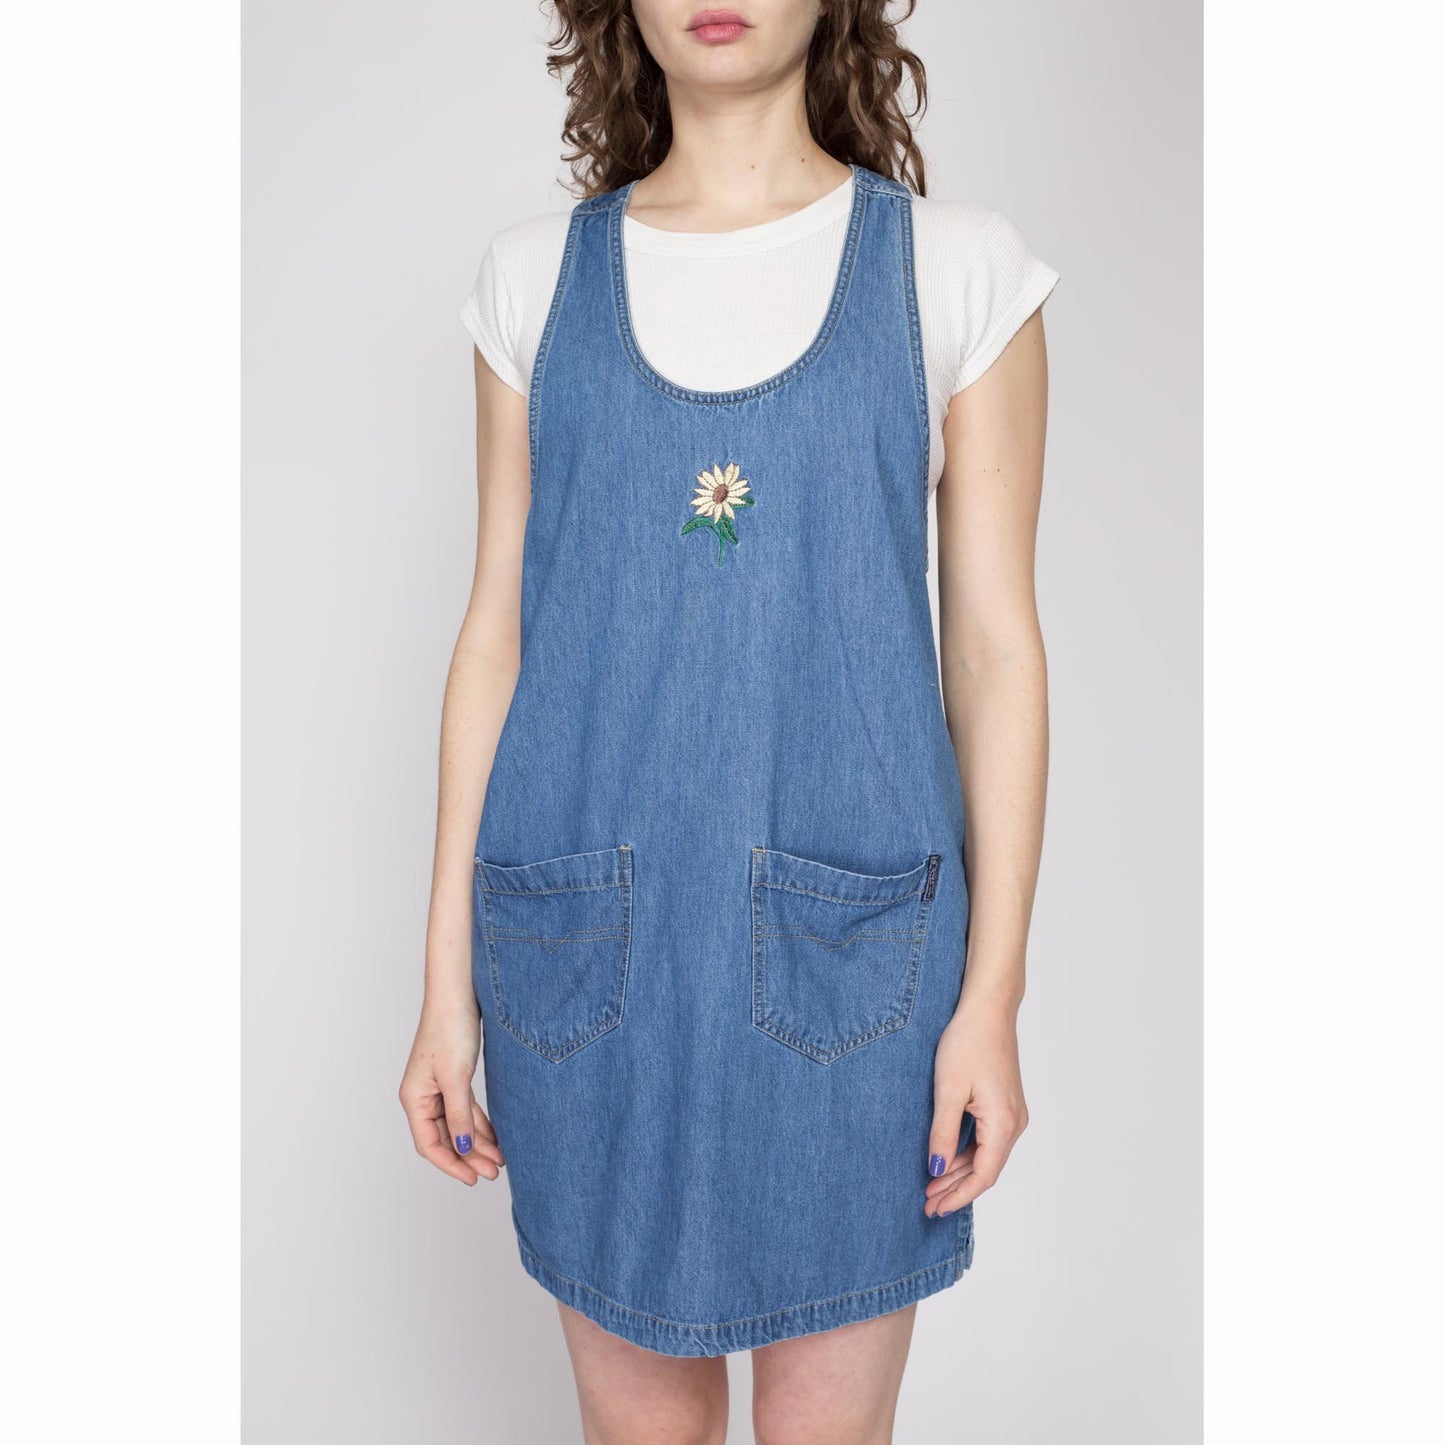 Medium 90s Denim Daisy Pinafore Mini Dress | Vintage Sleeveless Floral Jean Overall Jumper Dress